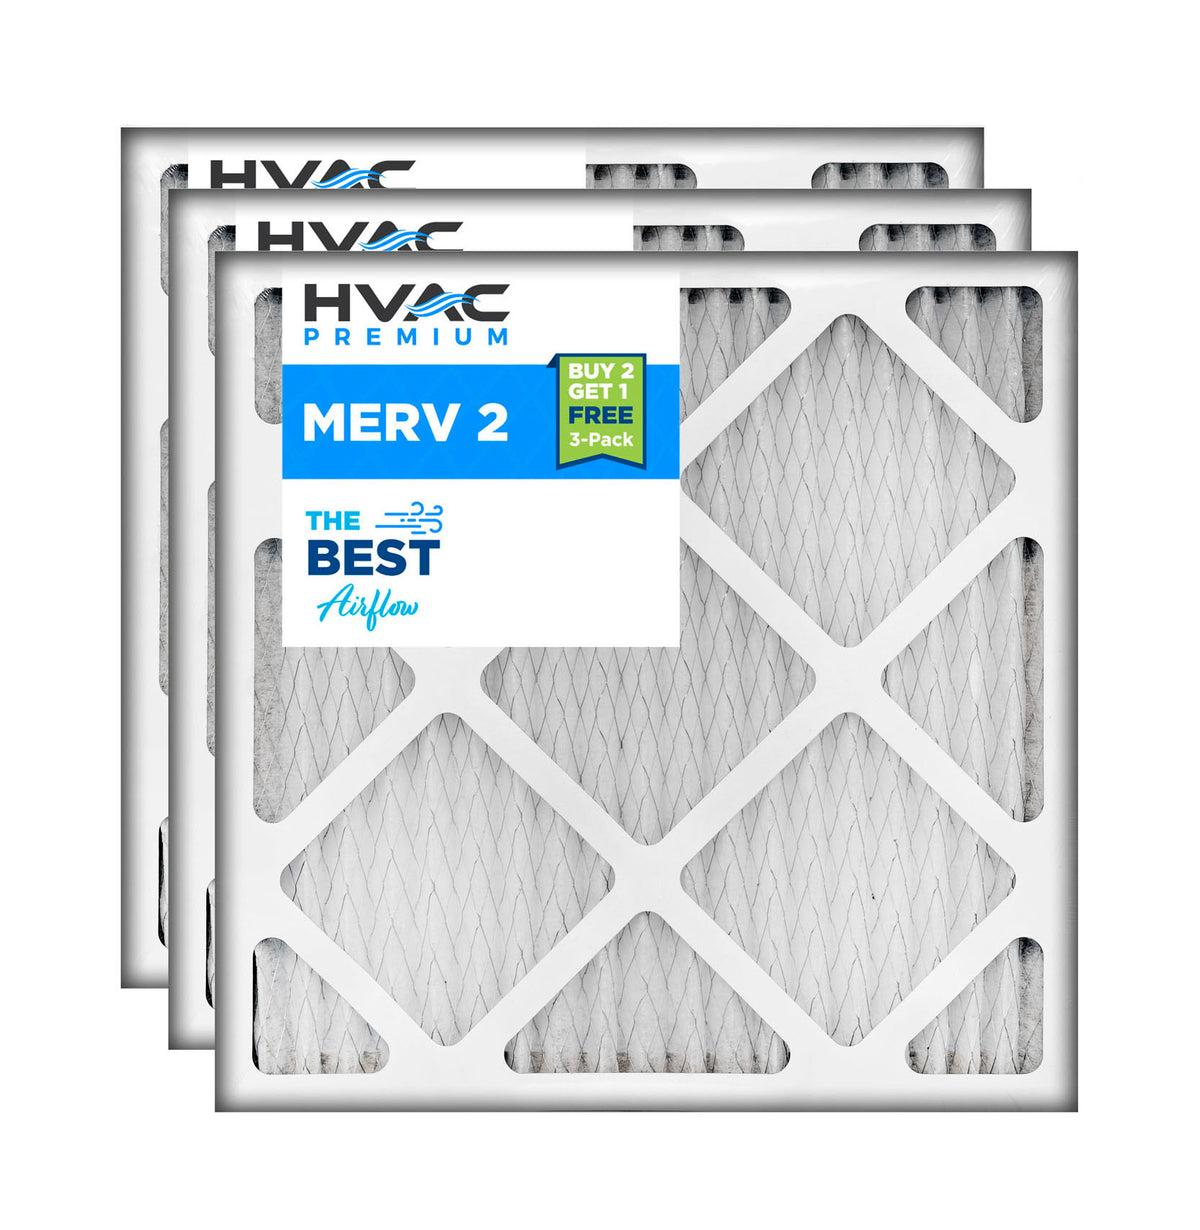 12 x 24 Merv 2 HVAC Pleated Filter, 3-Pack